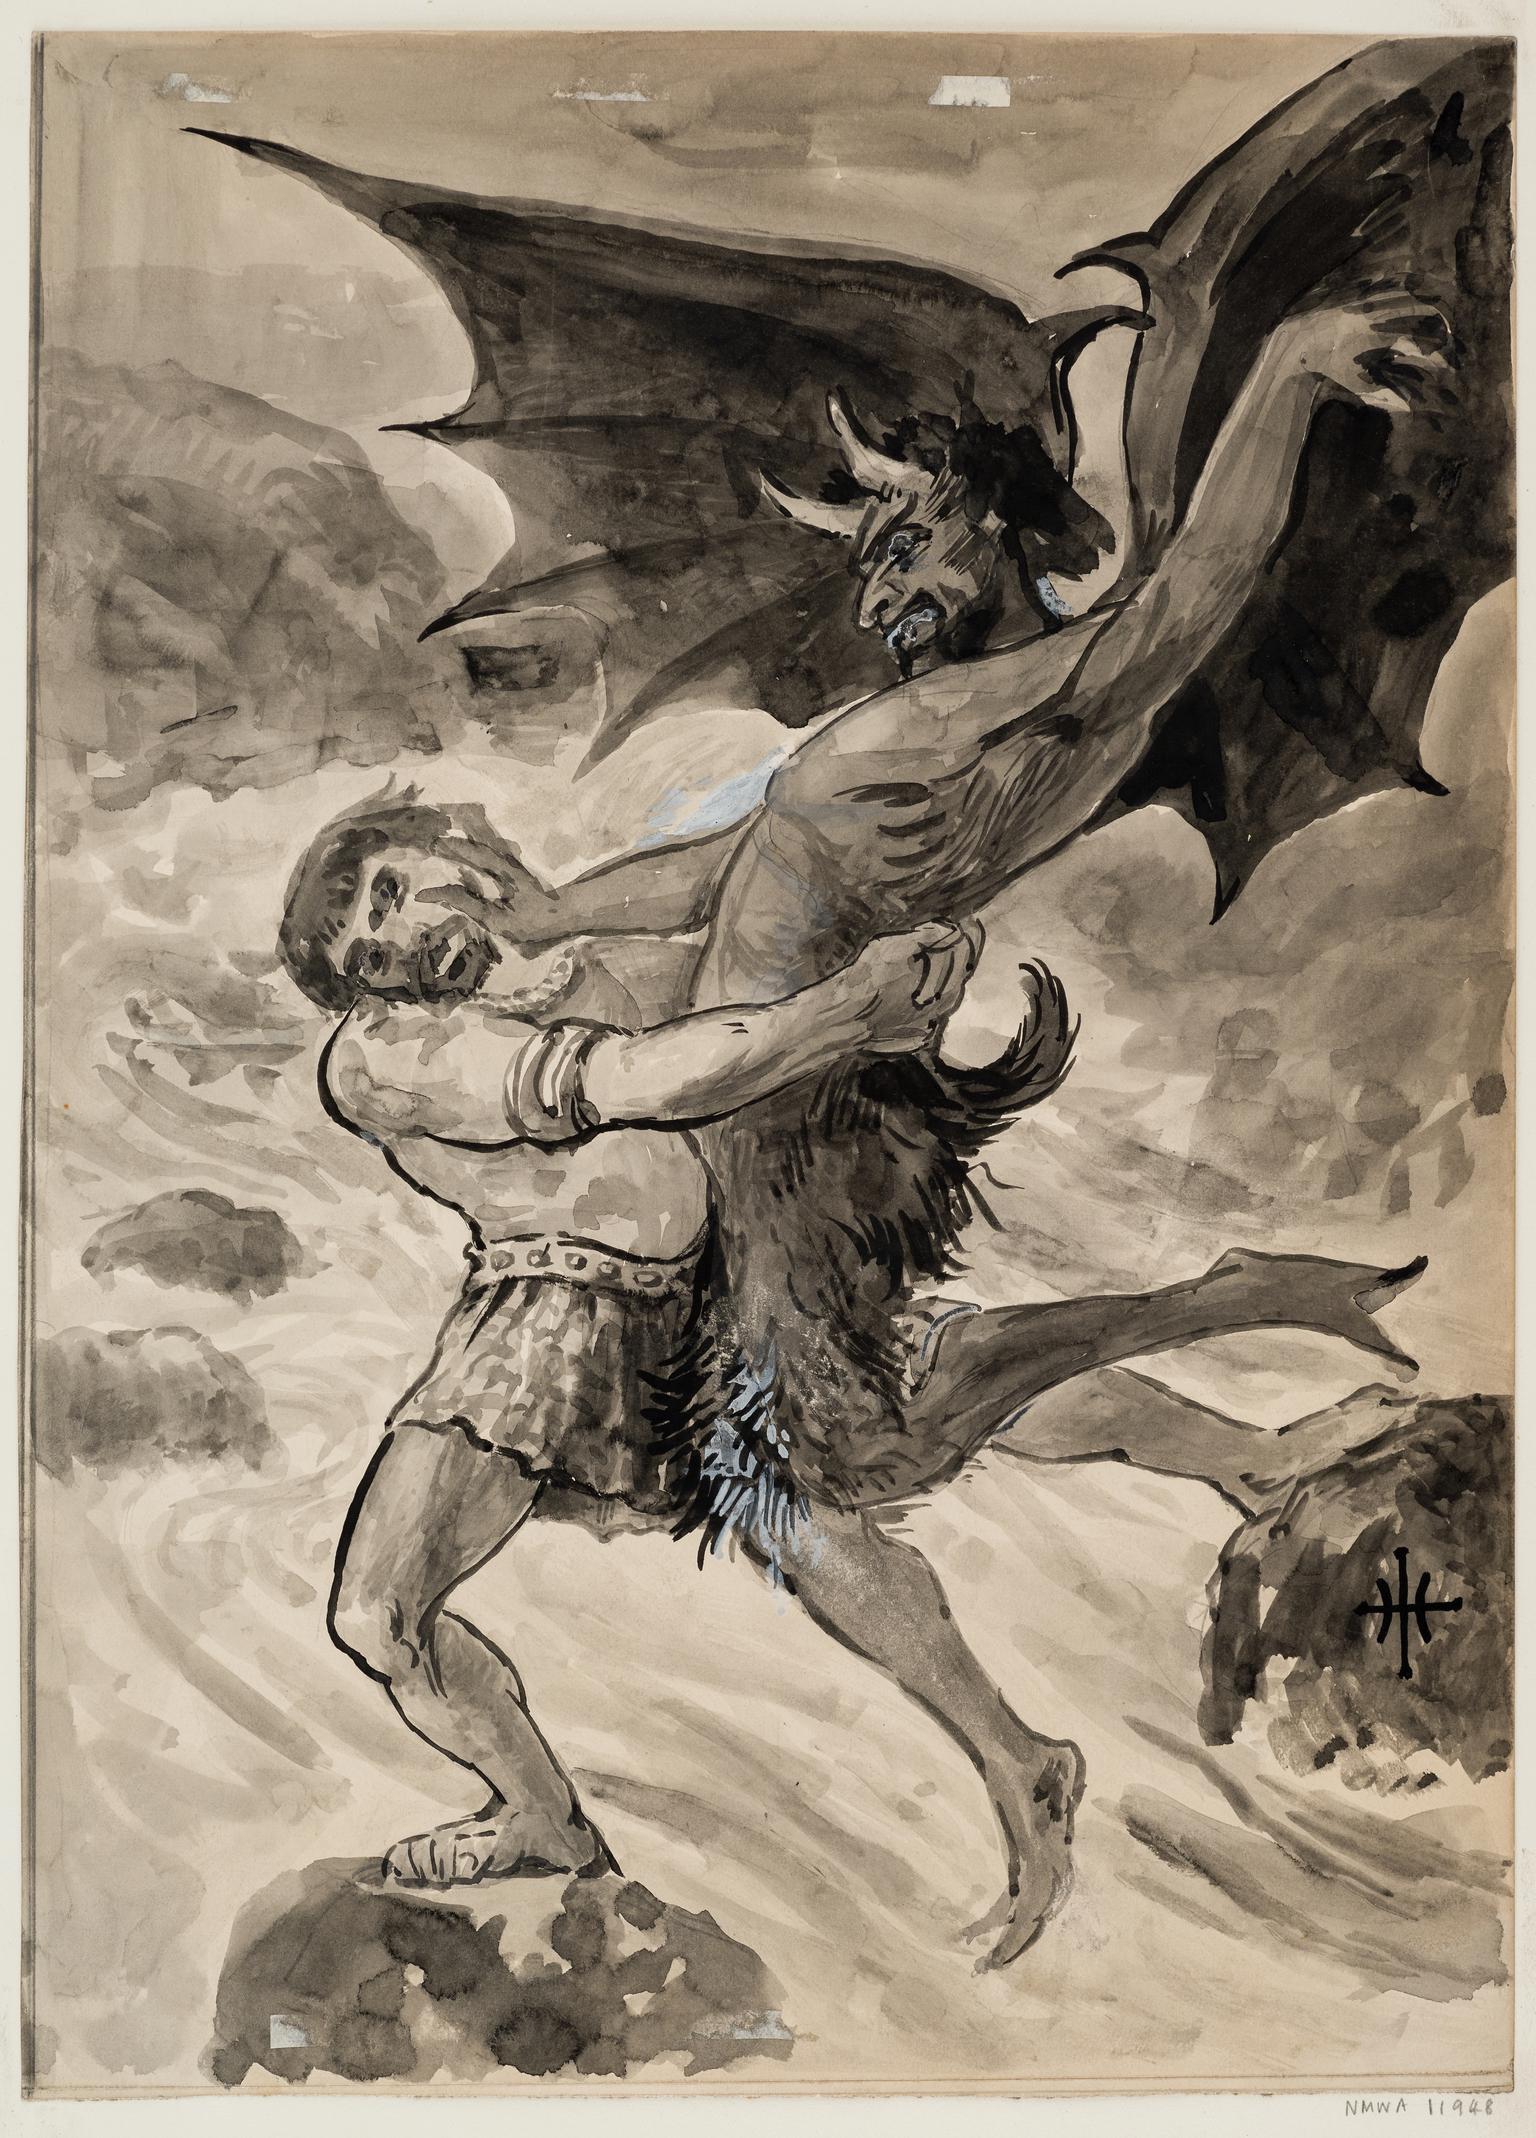 Man wristling with devil